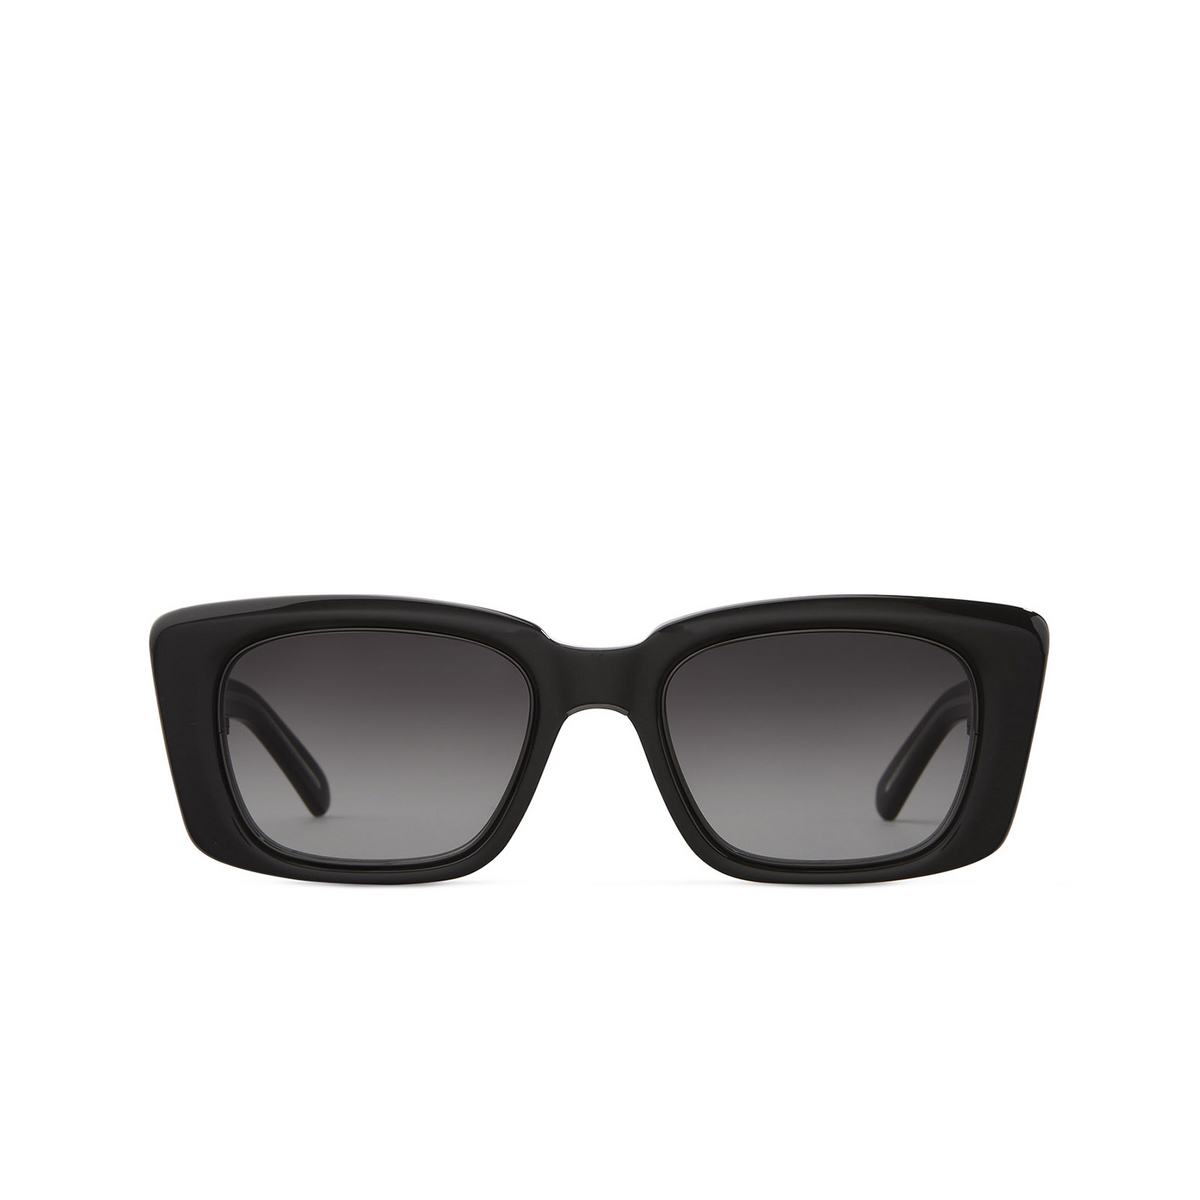 Mr. Leight CARMAN S Sunglasses BK-GM/LICG Black-Gunmetal - front view